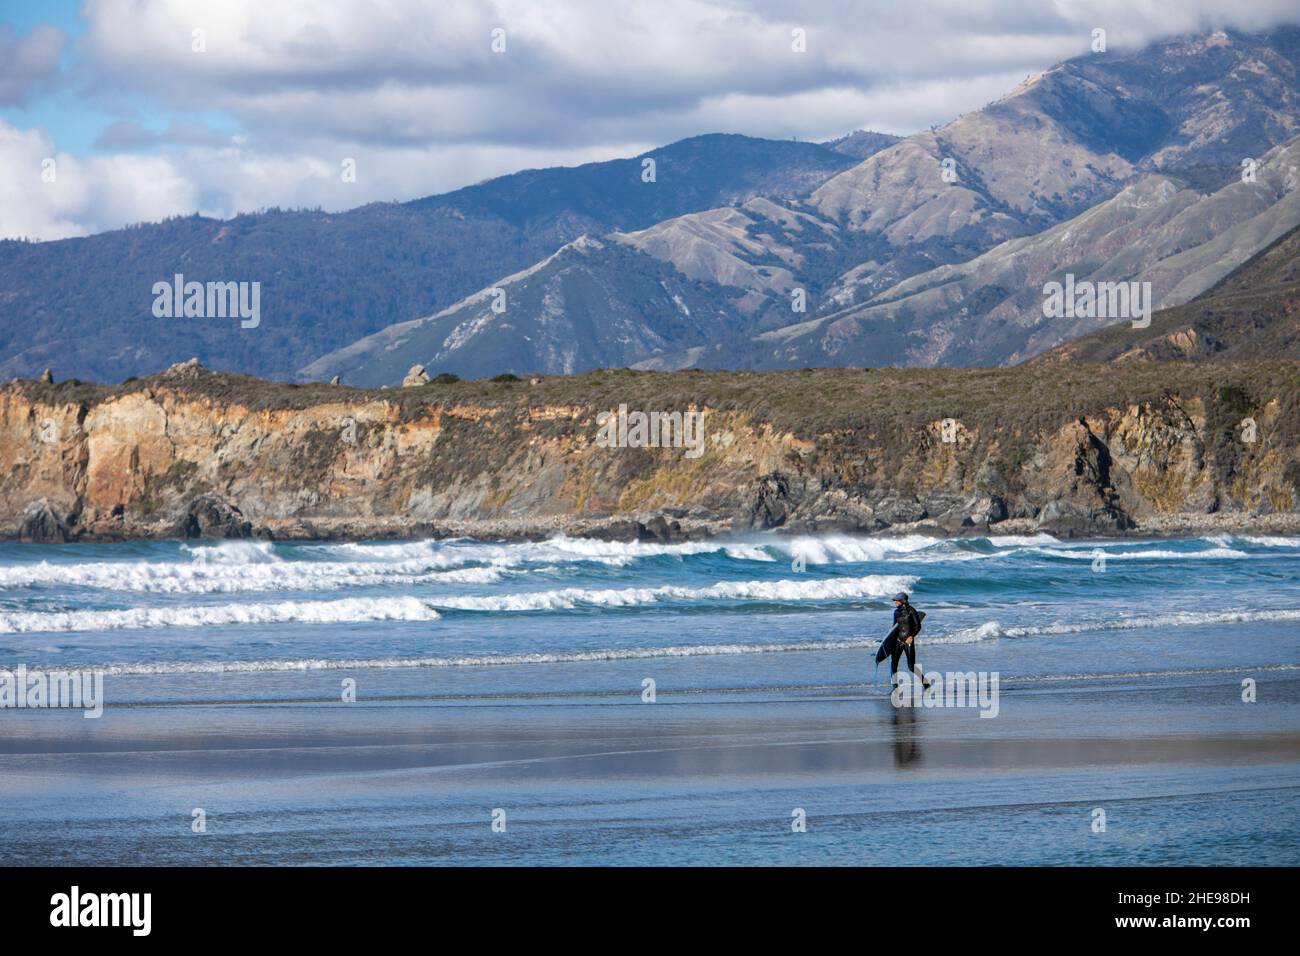 Surfer at Sand Dollar beach, southern Big Sur coast, Highway 1, California Stock Photo